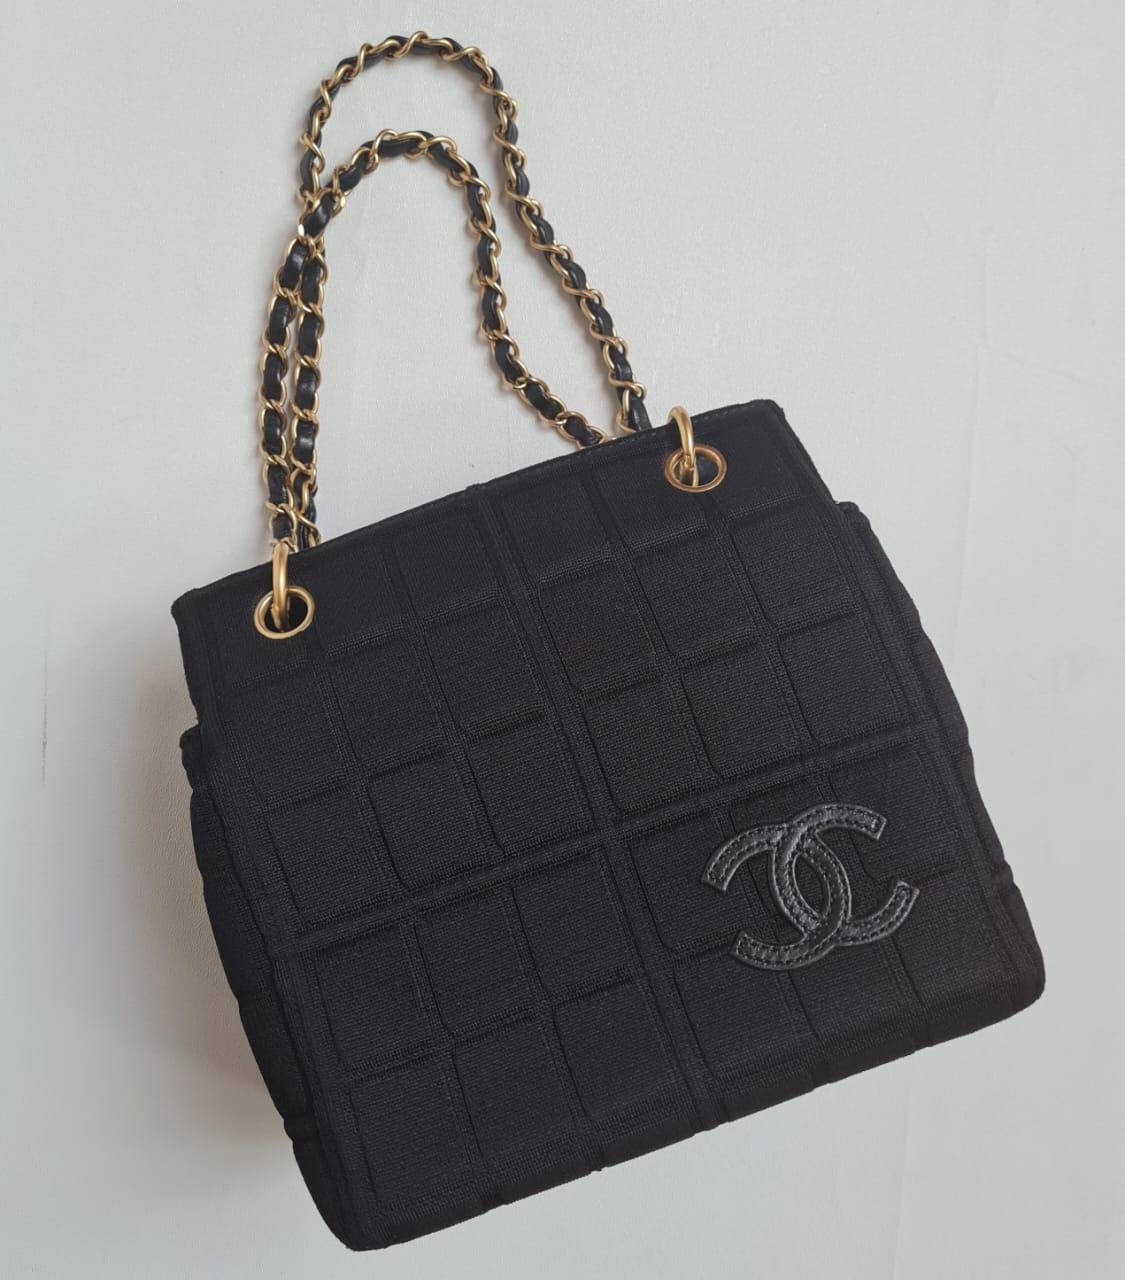 Vintage 2000s Chanel Black Jersey Chocolate Bar Tote Bag 8